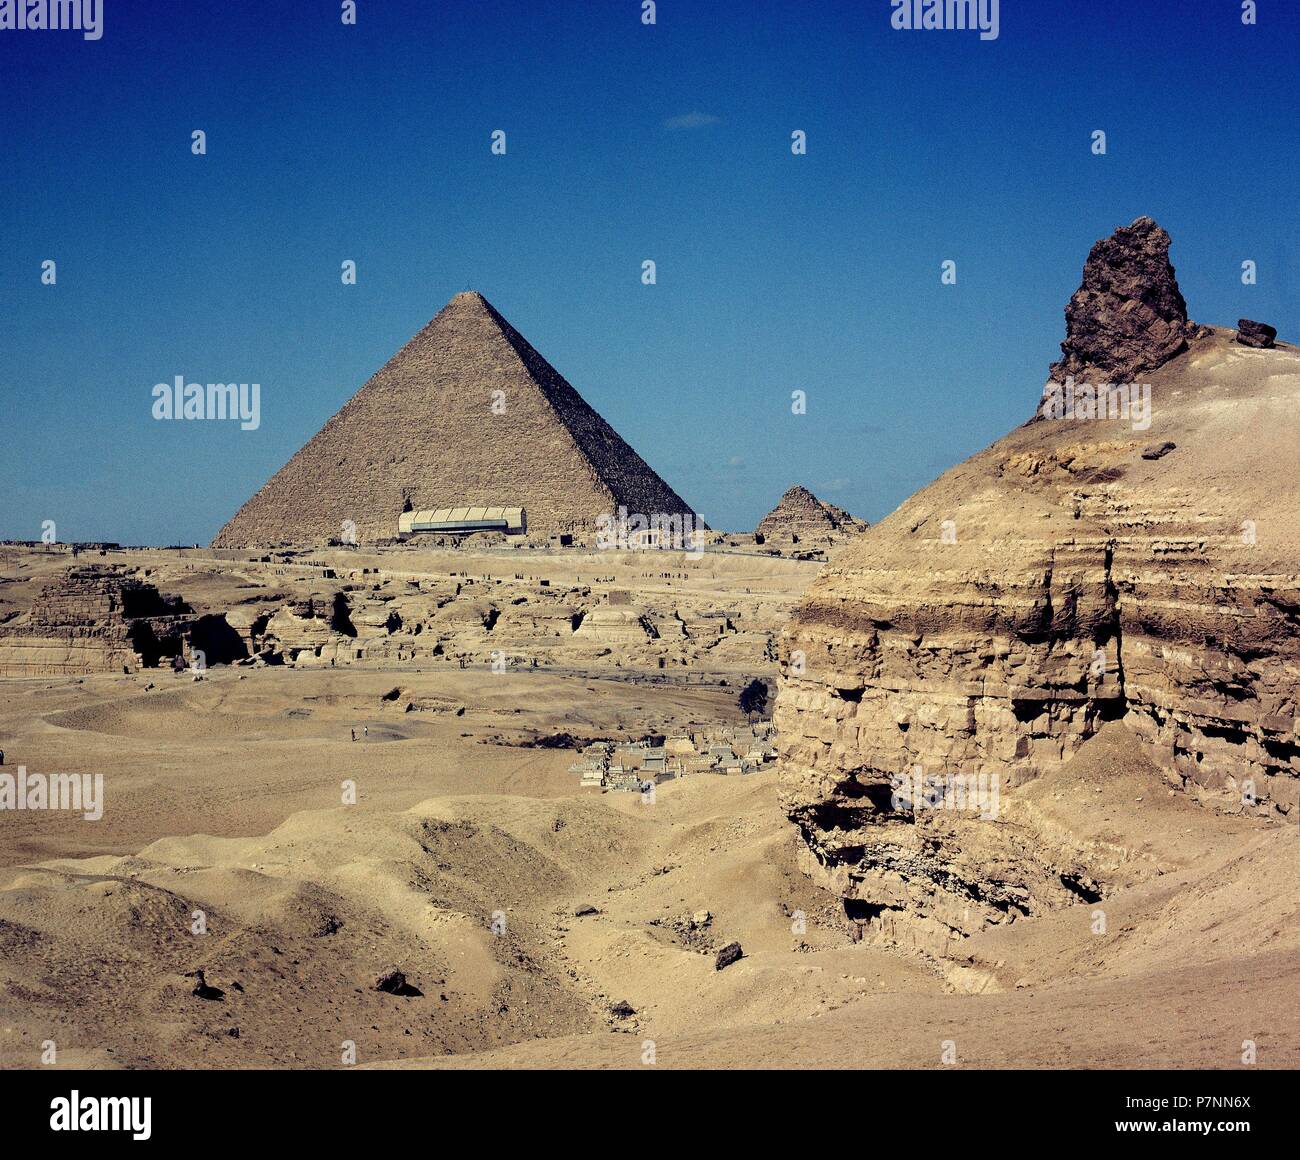 PIRAMIDE DE KEOPS - IV DINASTIA - HACIA EL 2585 AC. Location: CHEOPS PYRAMID, GIZA, EGYPT. Stock Photo